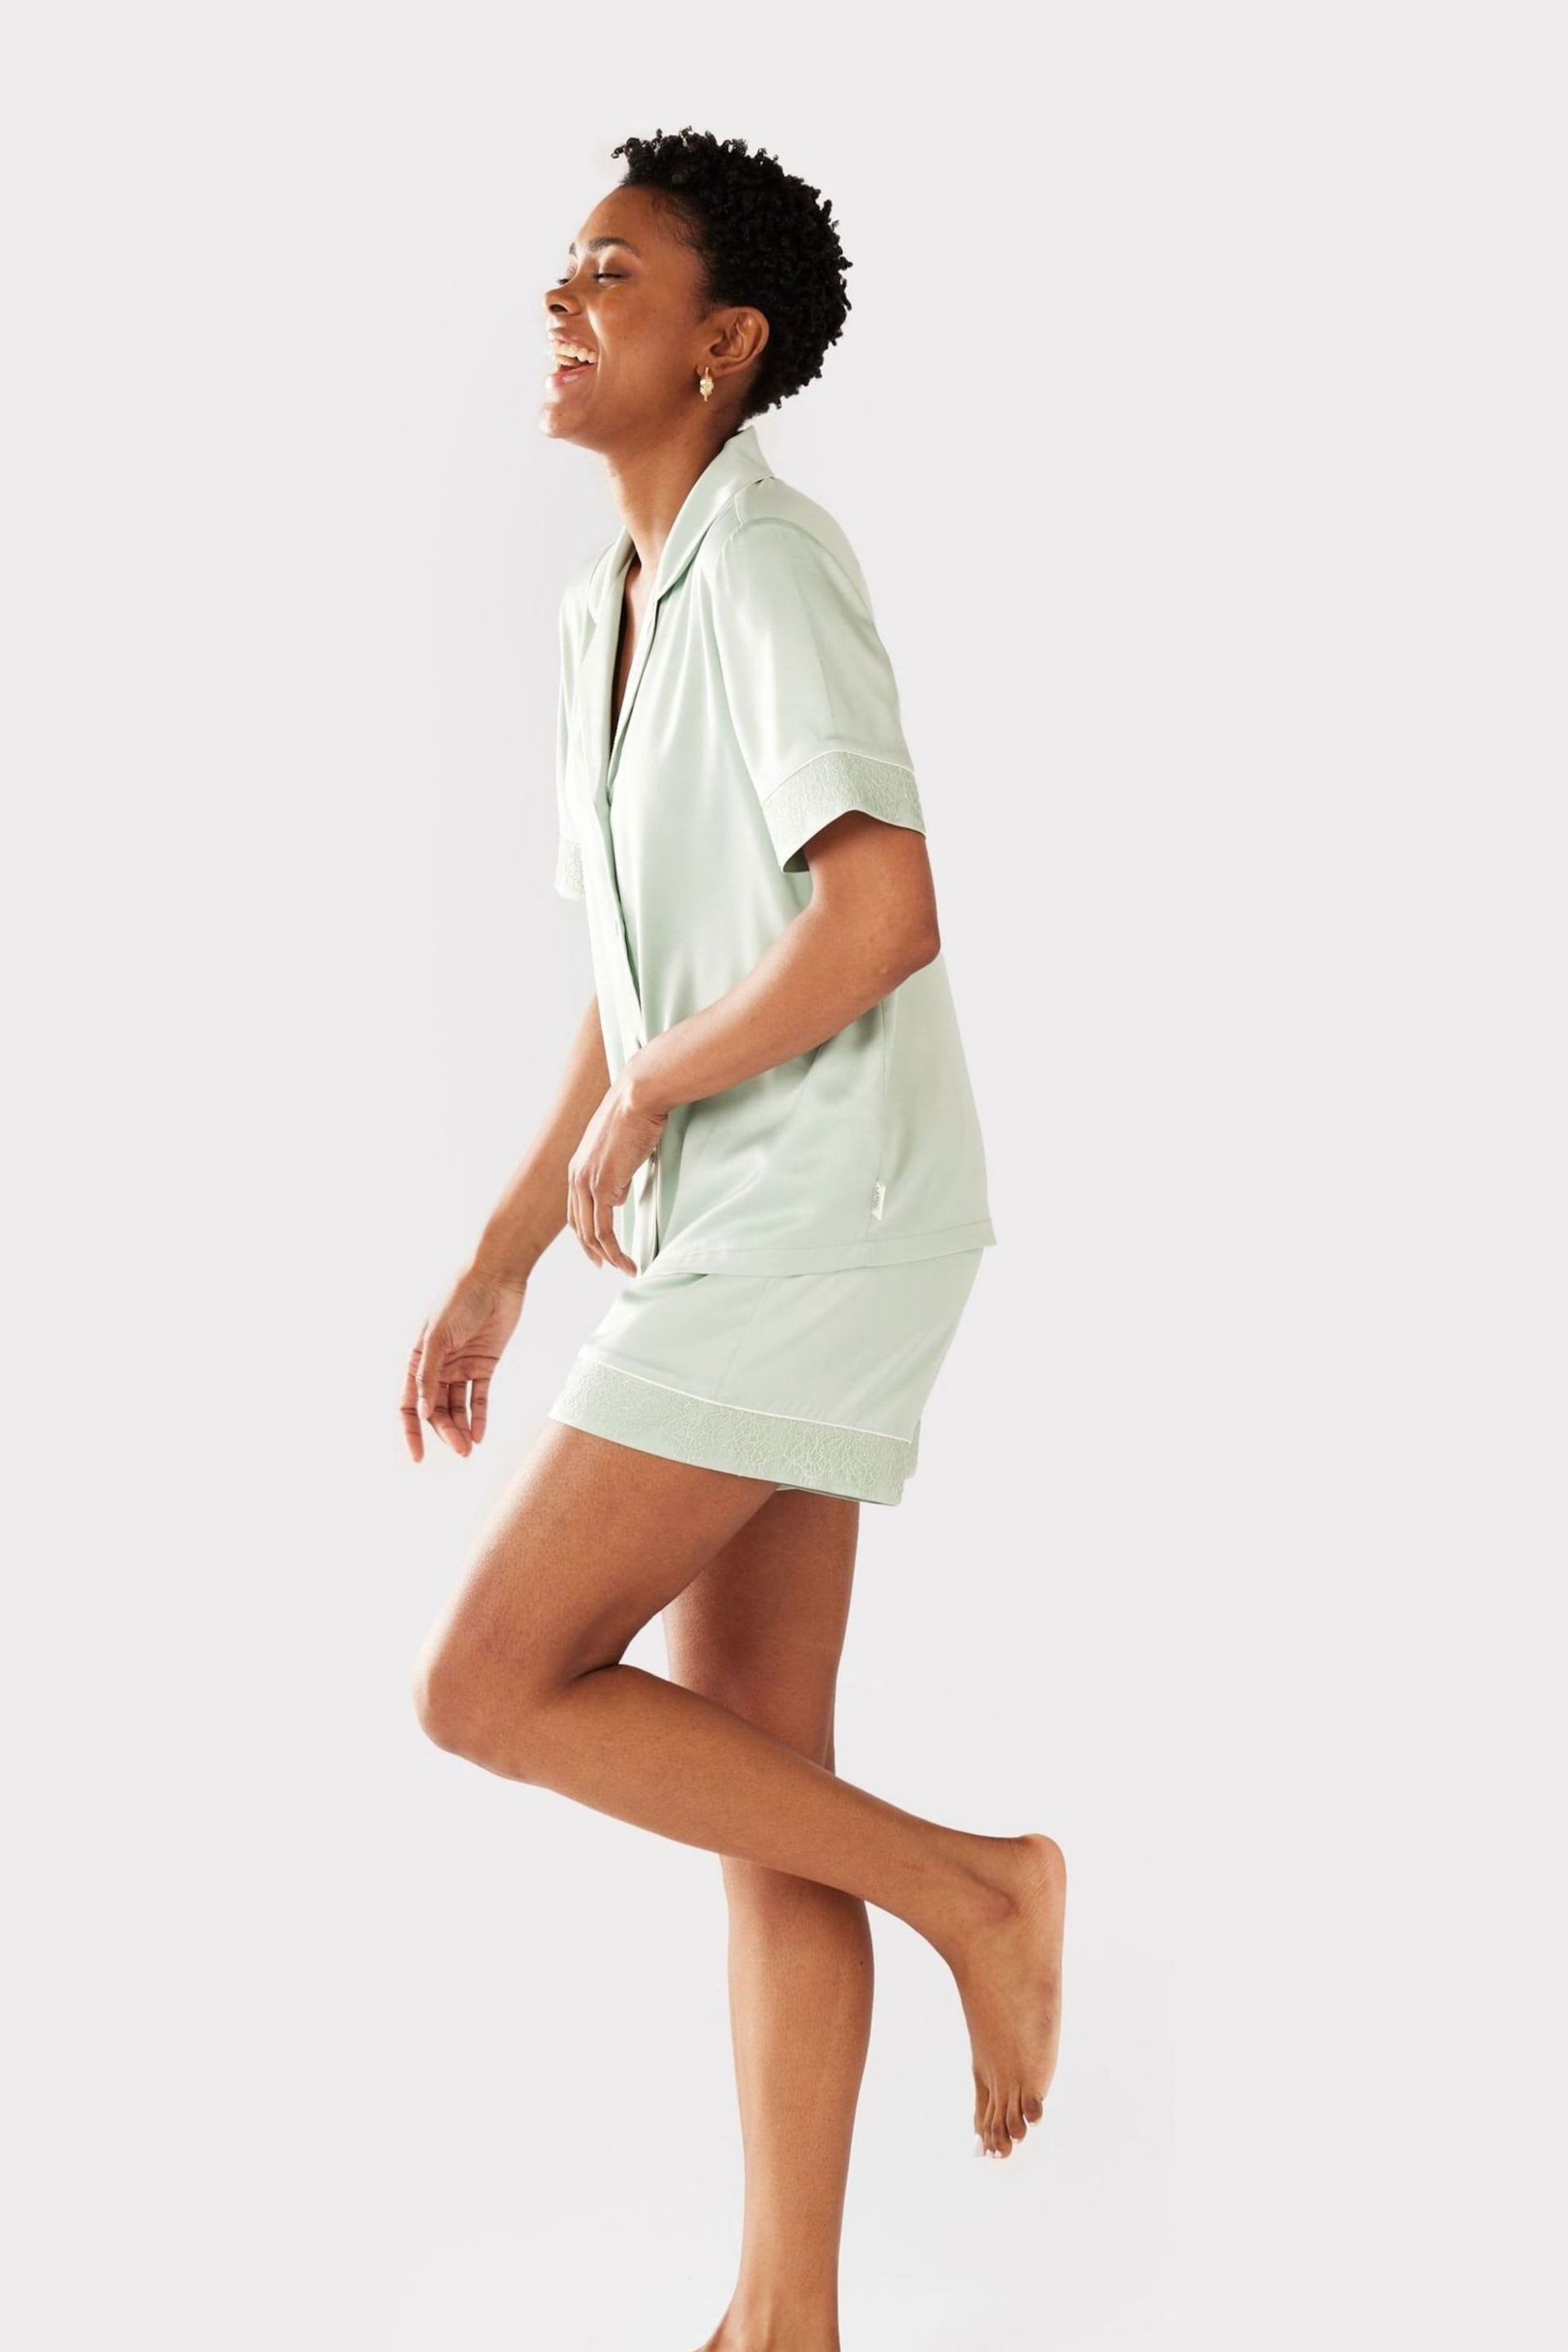 Chelsea Peers Green Satin Lace Trim Short Pyjama Set - Image 2 of 5